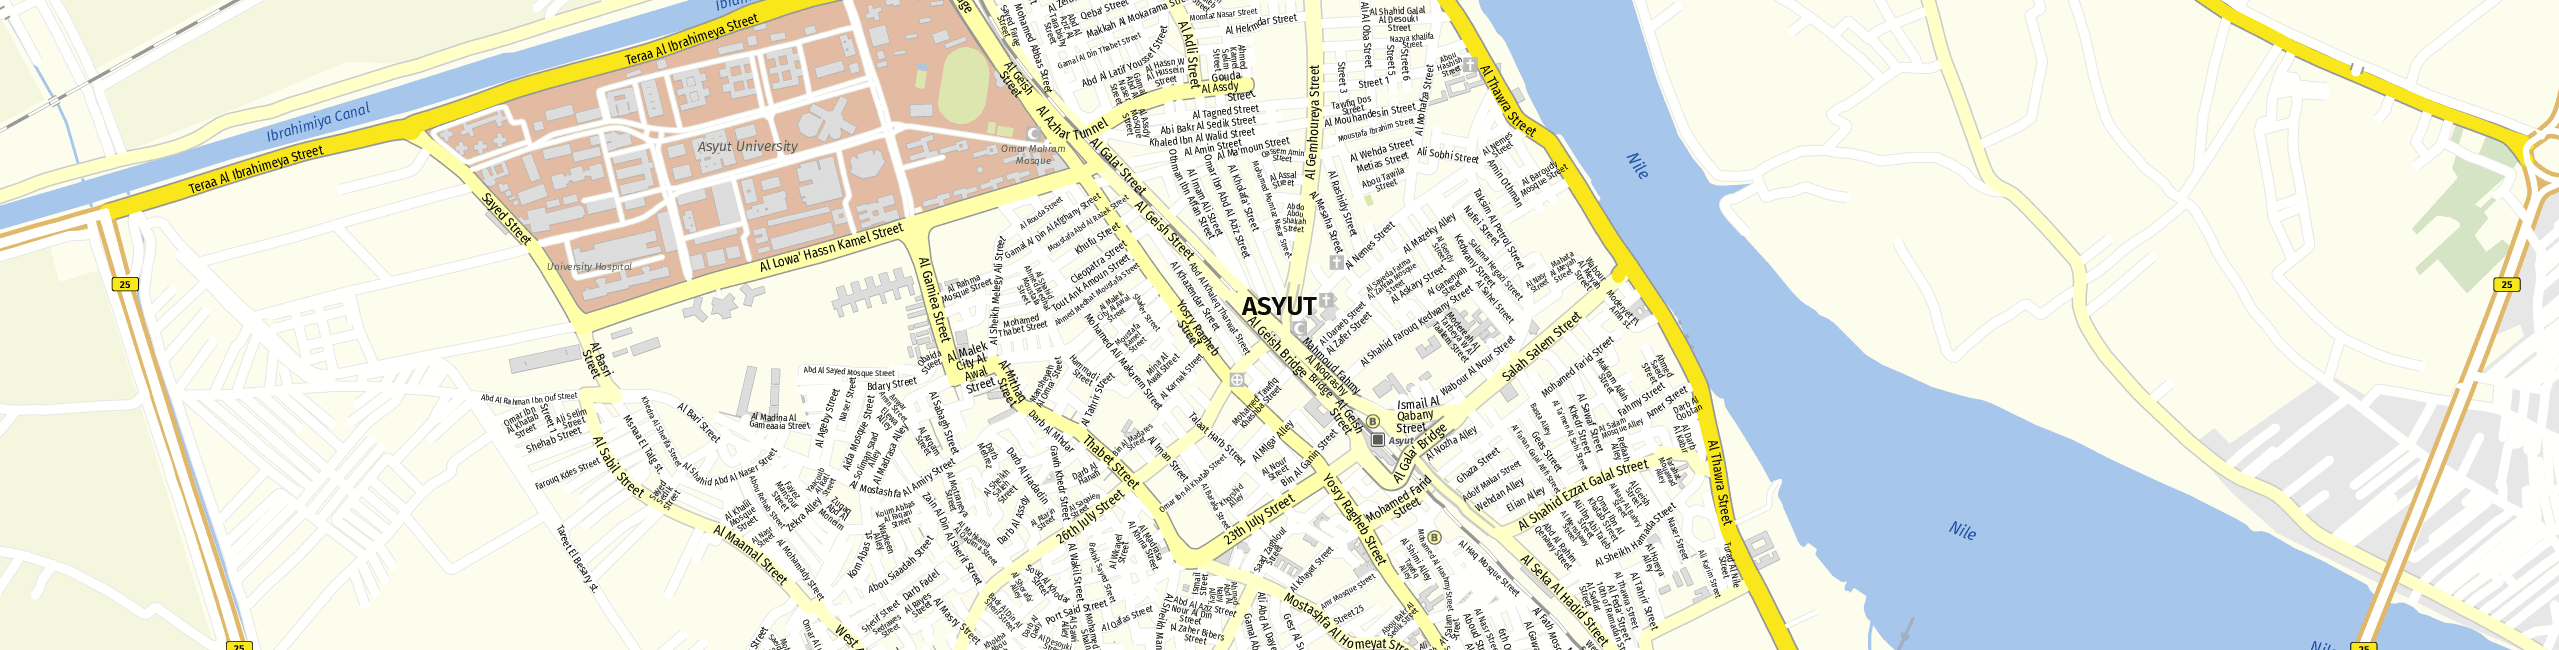 Stadtplan Asyut zum Downloaden.